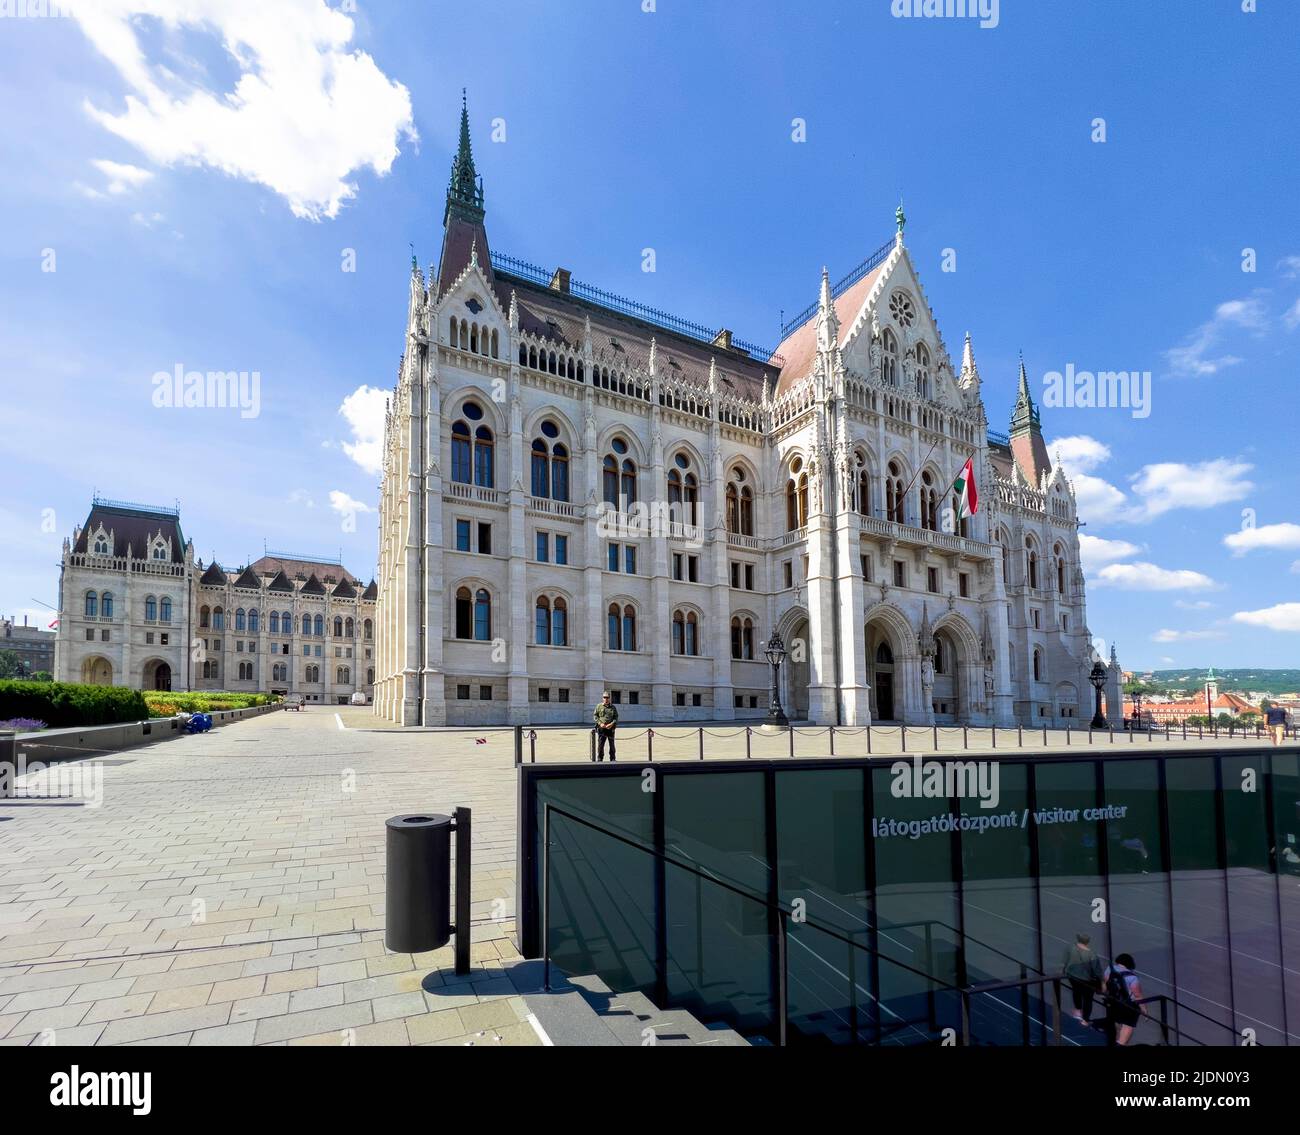 The Hungarian Parliament Building (Országház) in Budapest, Hungary Stock Photo